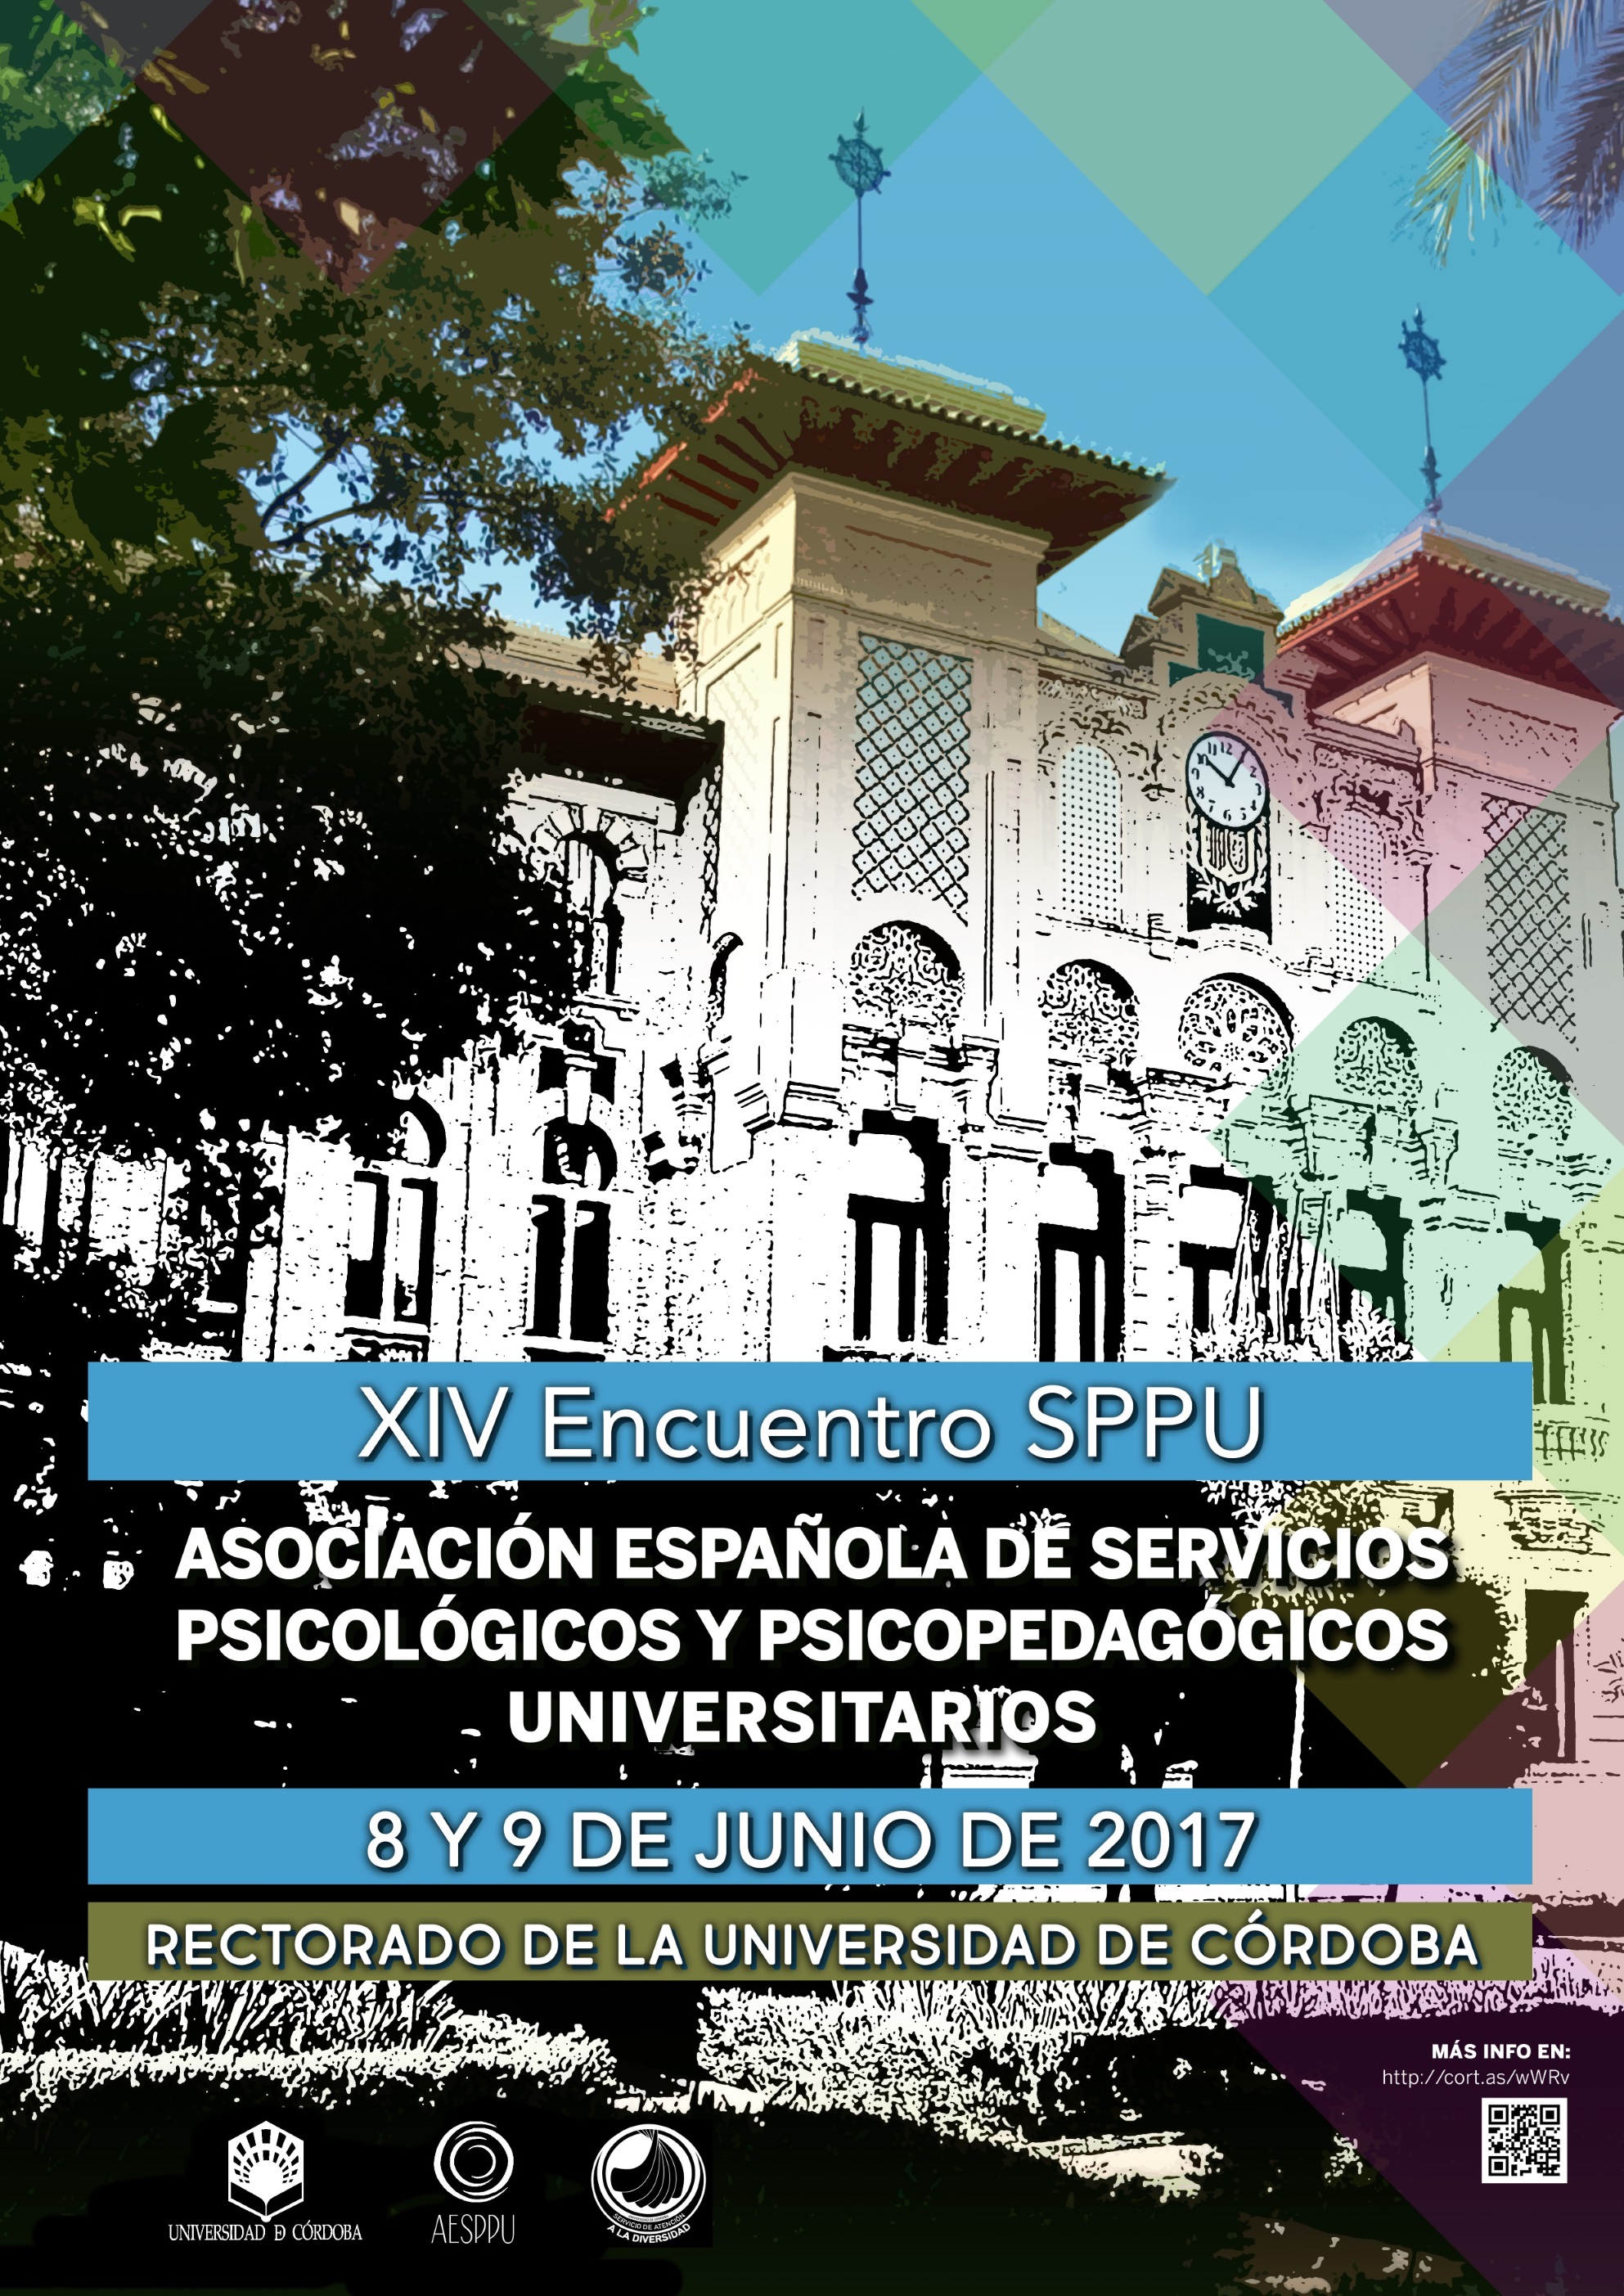 xiv encuentro sppu (córdoba 8 y 9 junio 2017)